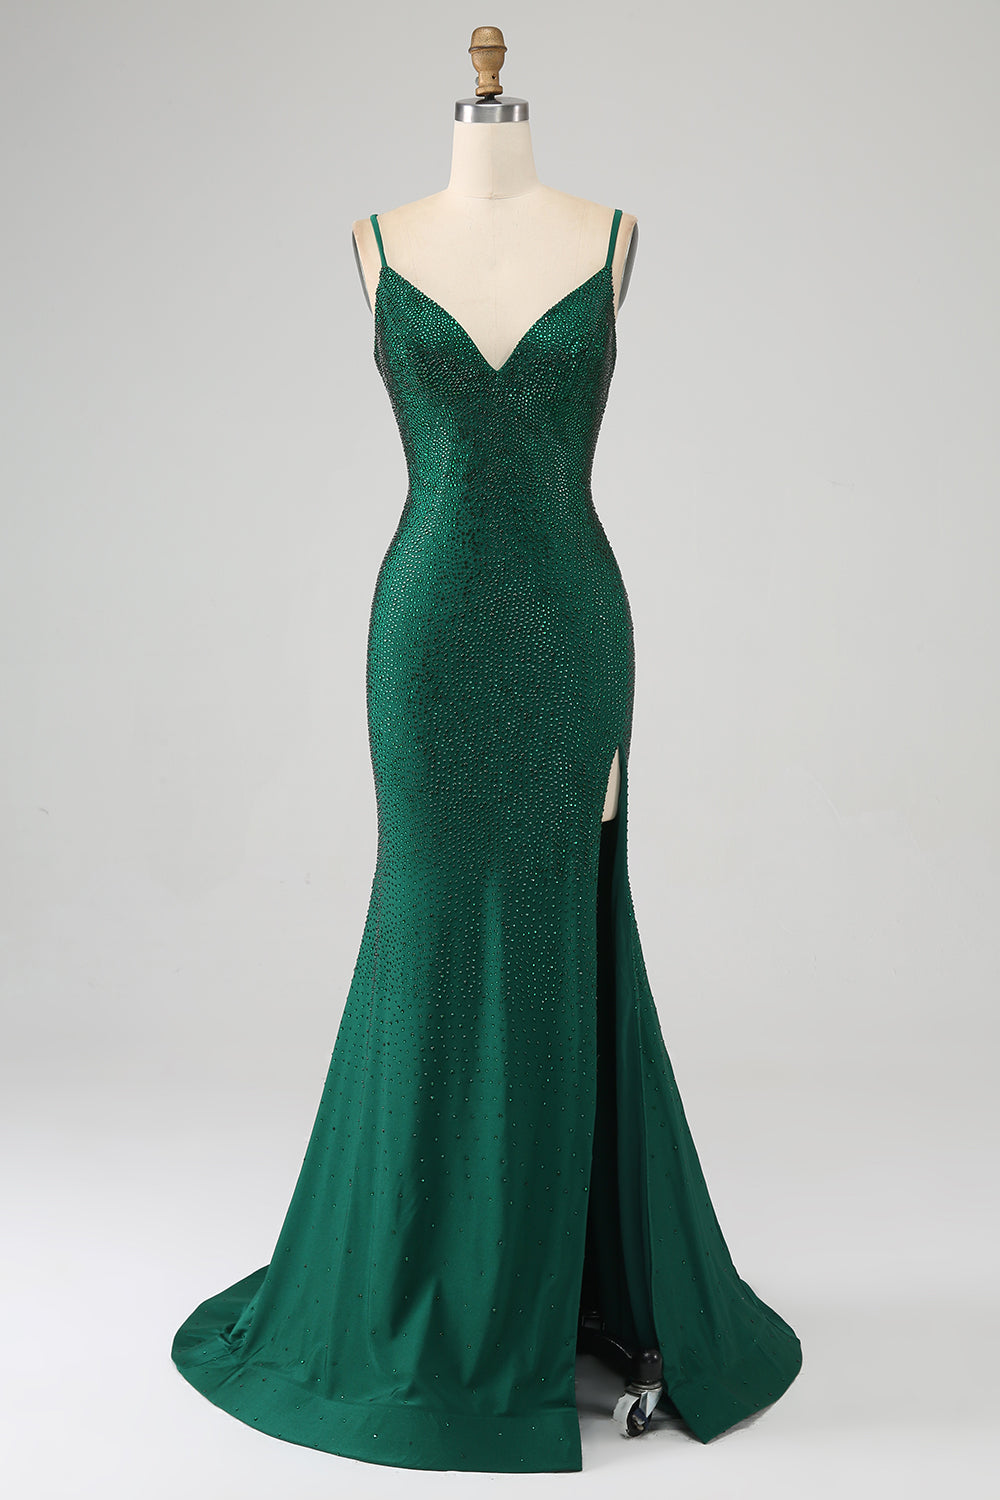 Sparkly Dark Green Beaded Long Mermaid Prom Dress with Slit